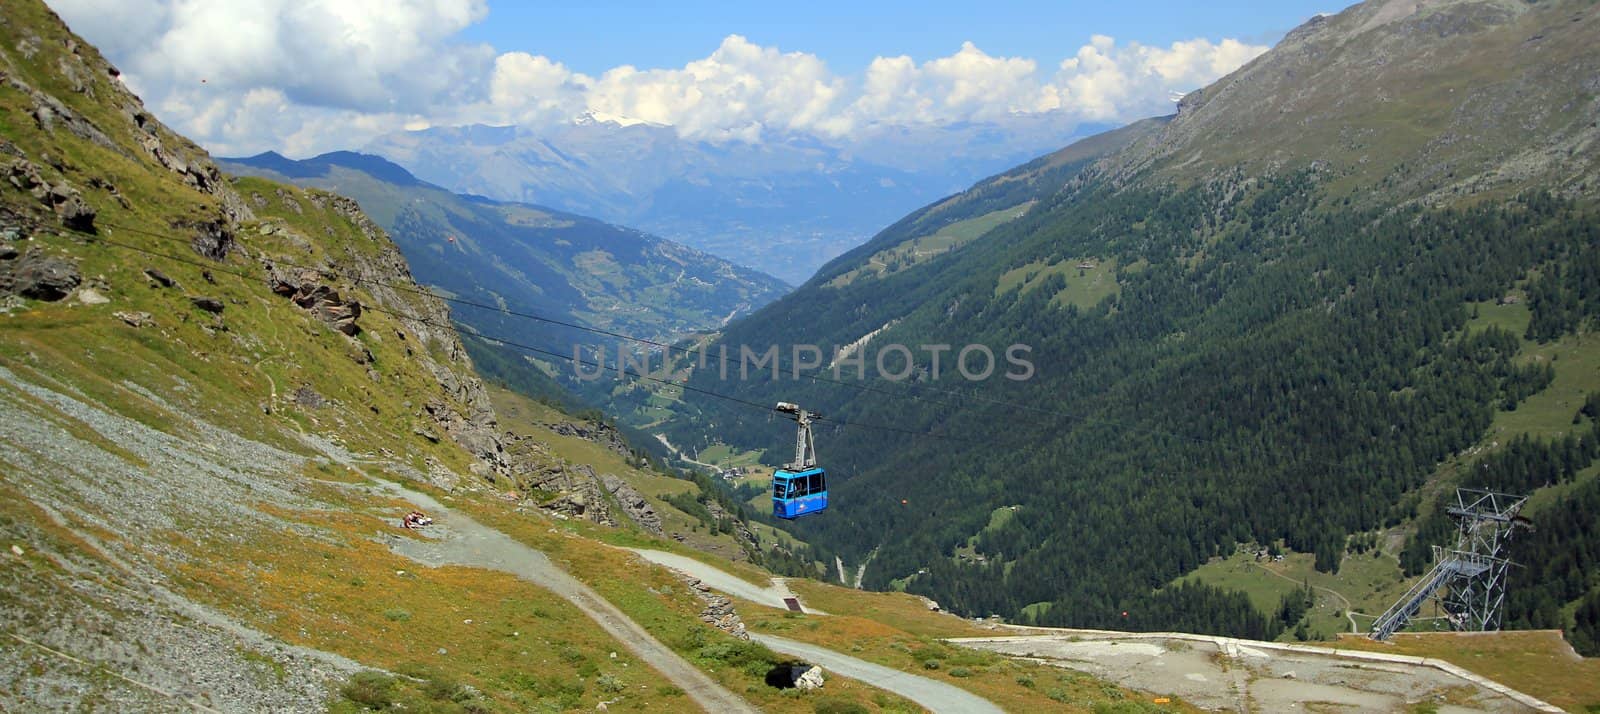 Grande Dixence valley, Switzerland by Elenaphotos21